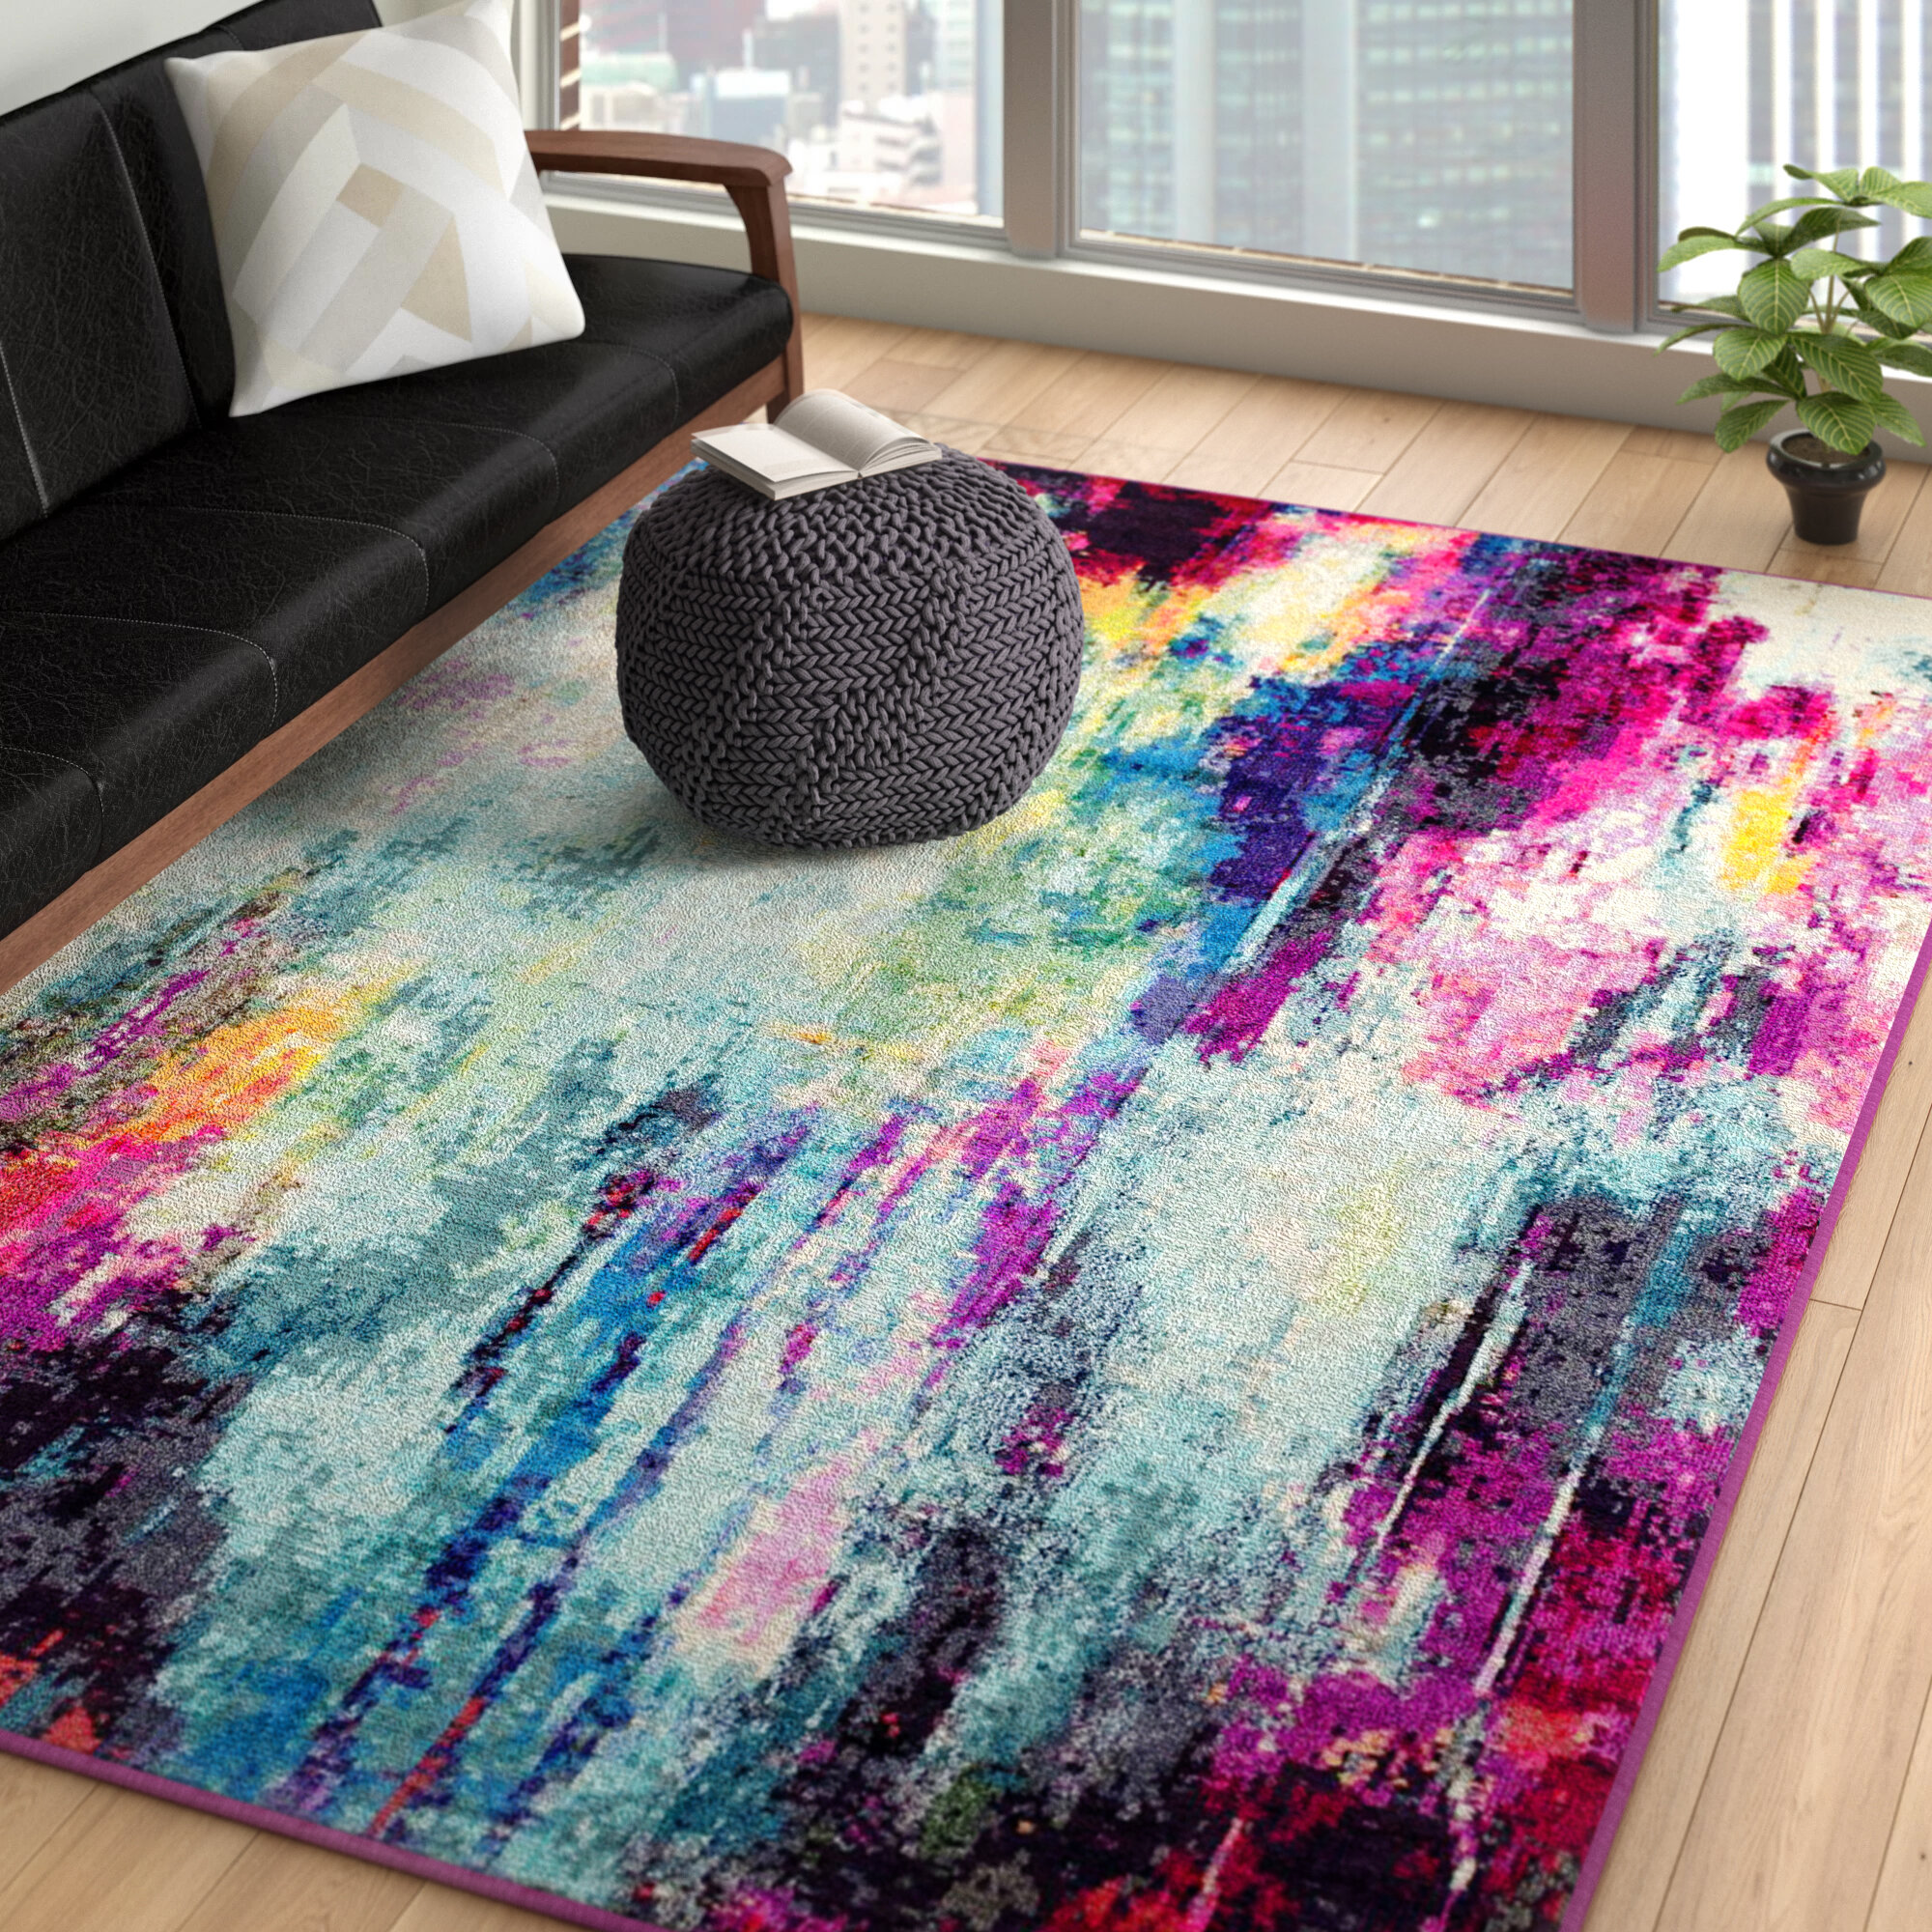 Colourful Striped Runner Rug Large Living Room Soft Pastel Carpet Mats Budget 